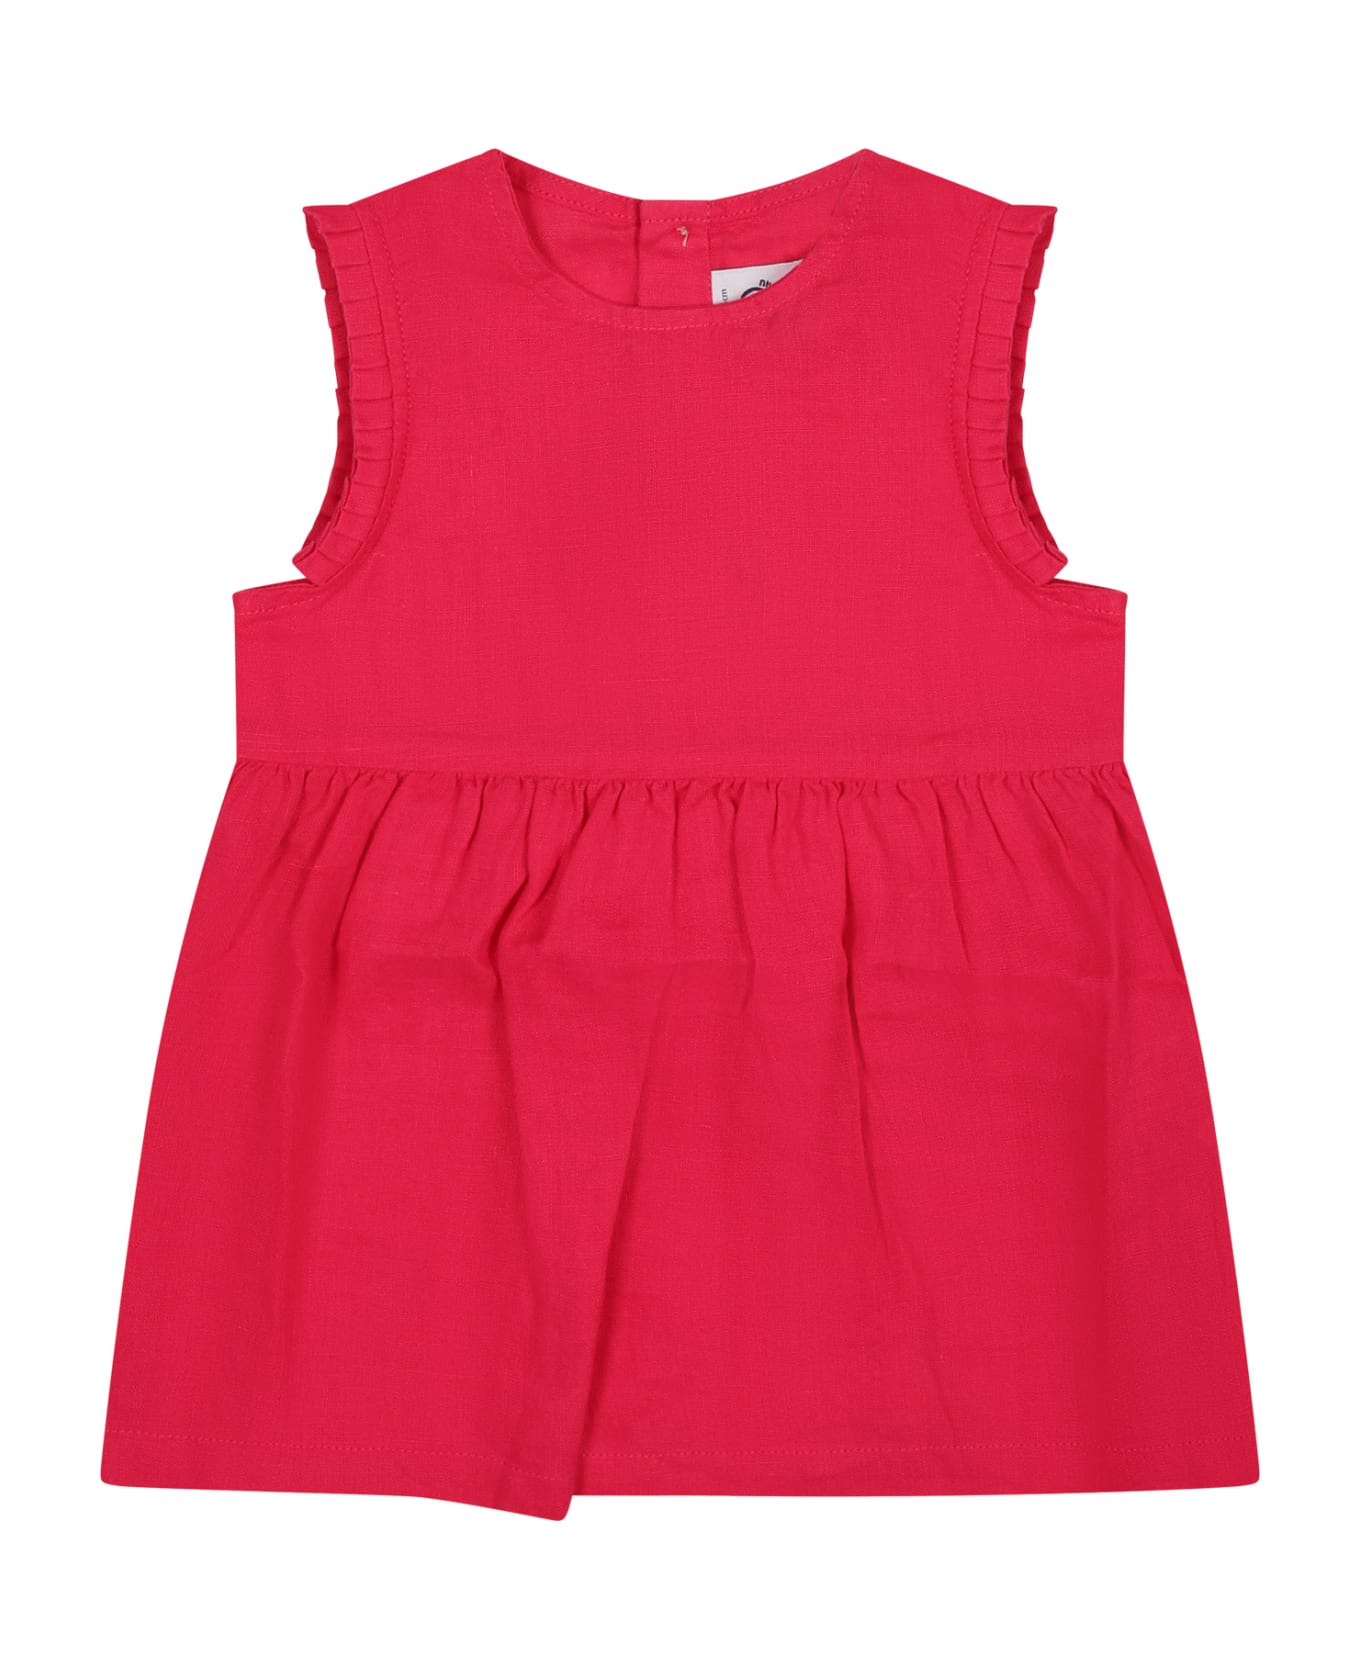 Petit Bateau Fuchsia Dress For Baby Girl With Ruffles - Fuchsia